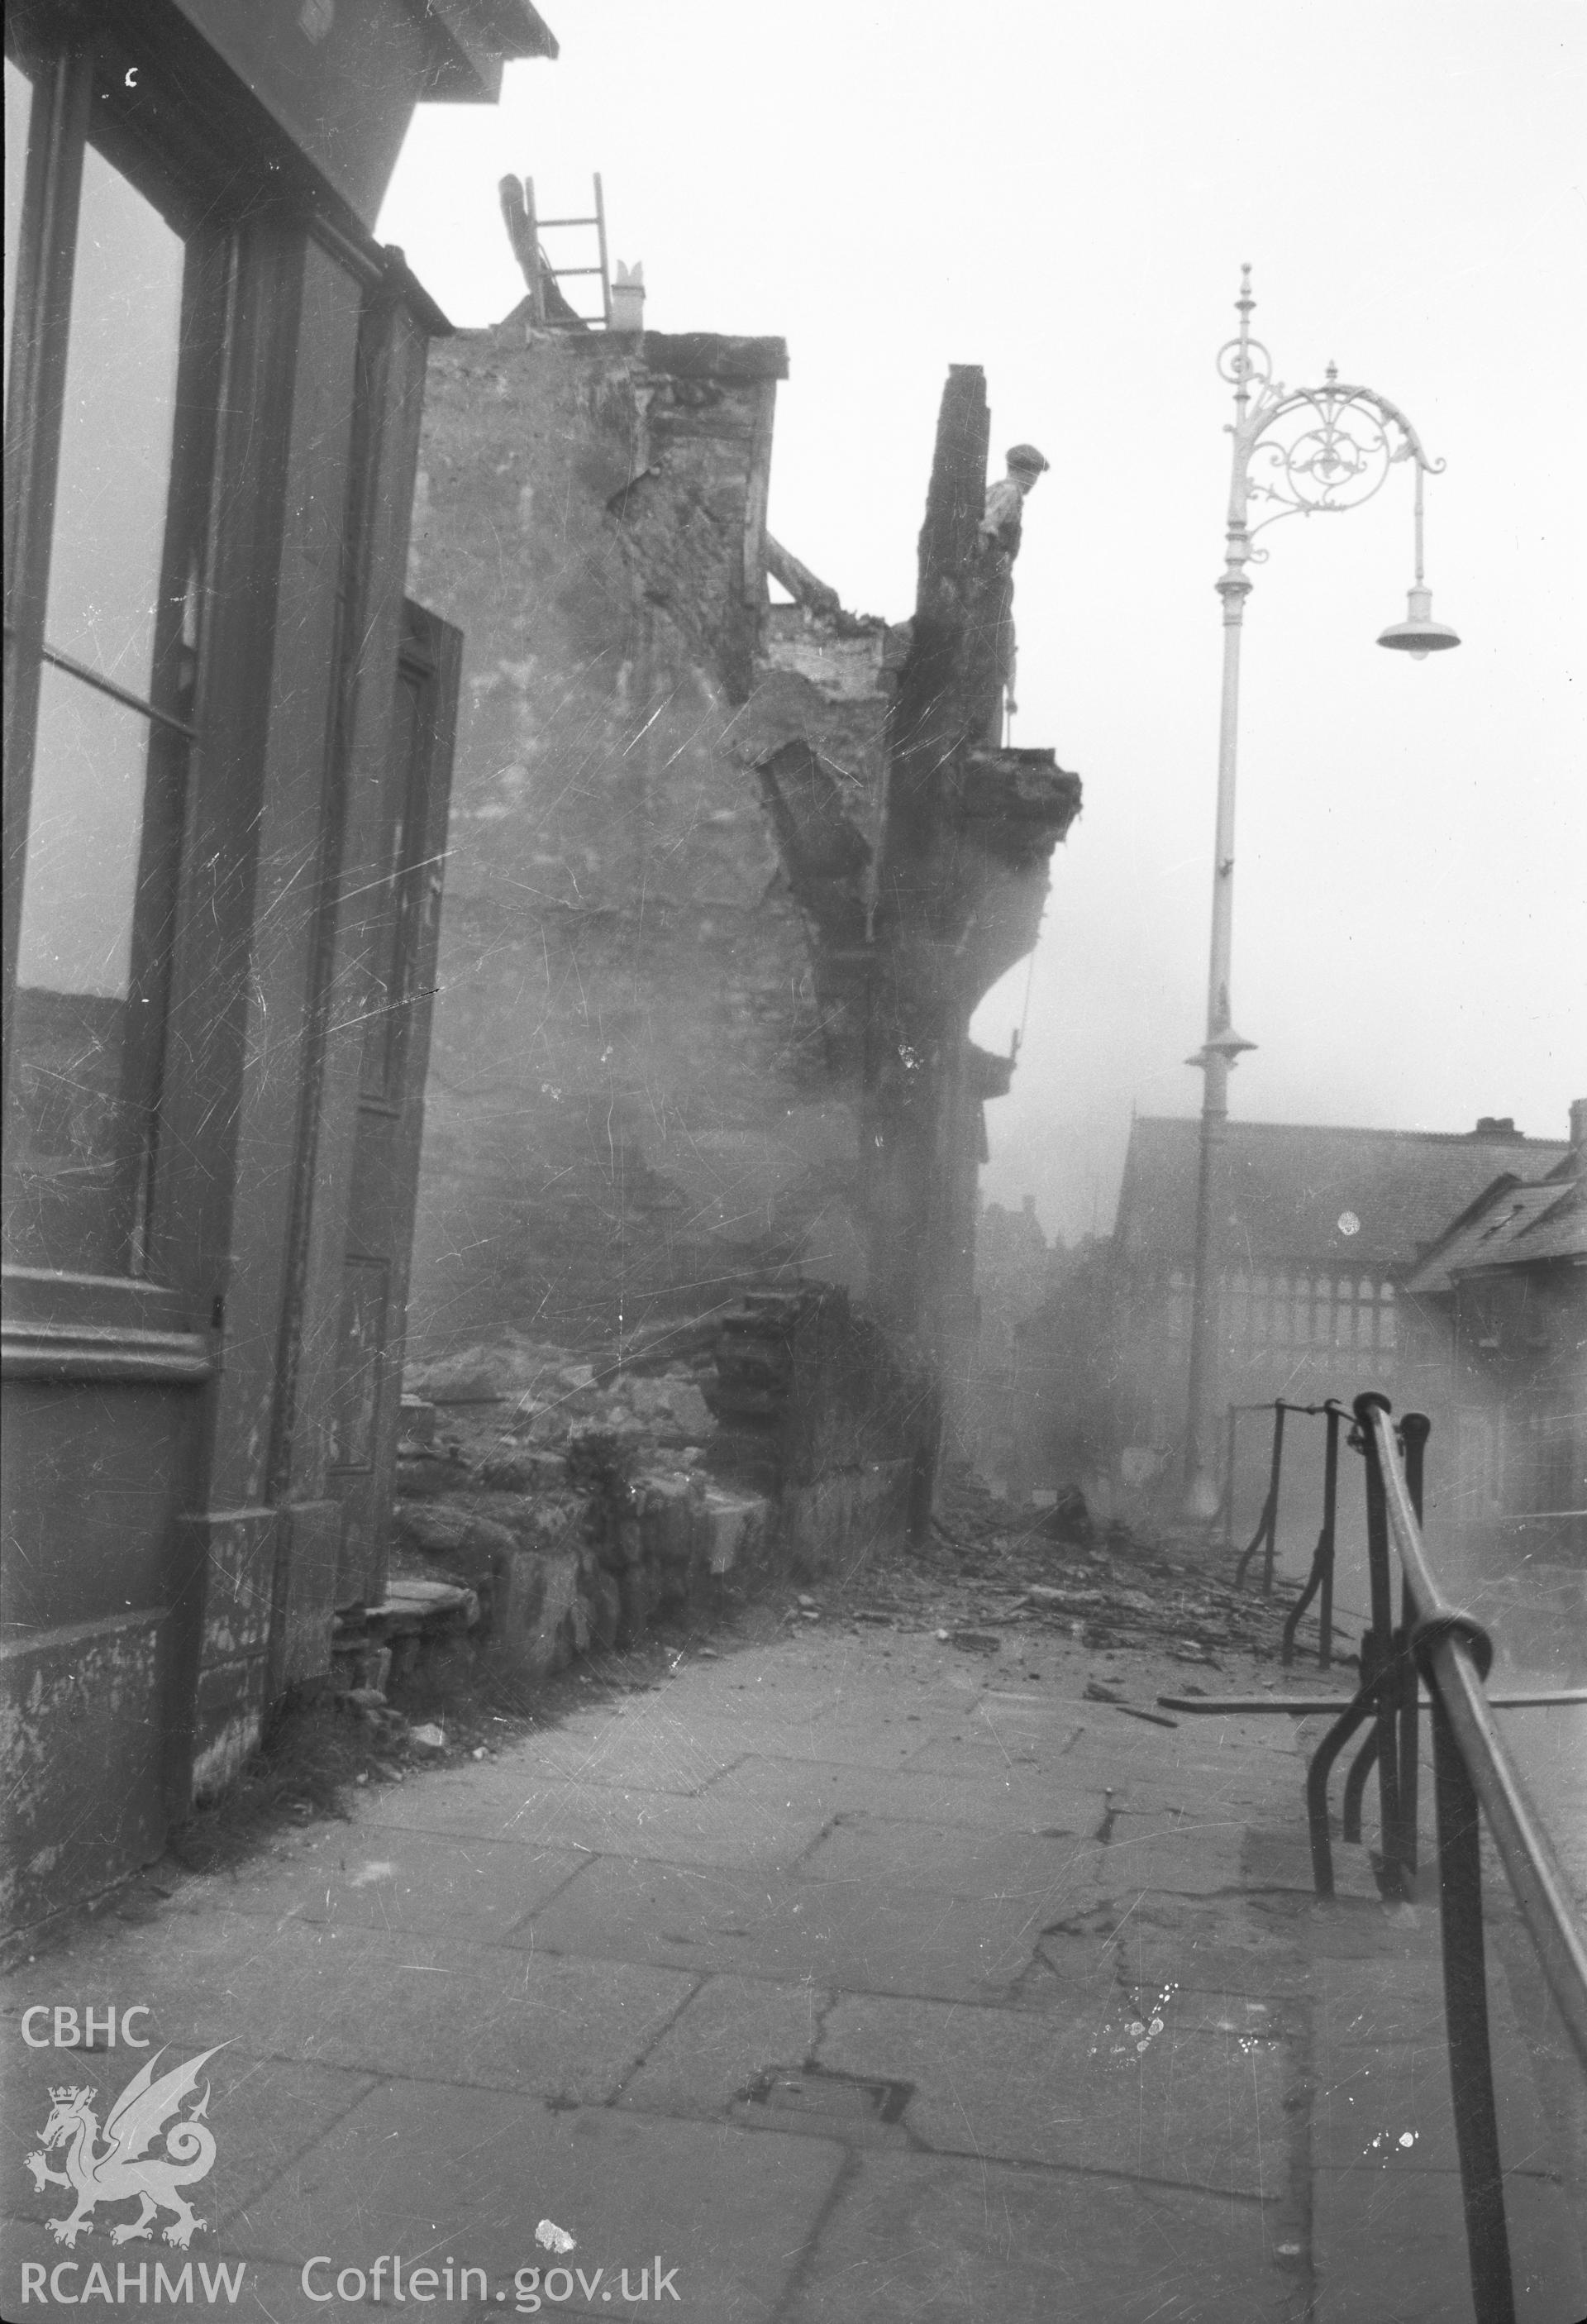 Digital copy of a nitrate negative showing an unidentified building in Wrexham - demolition in progress, taken by RCAHMW